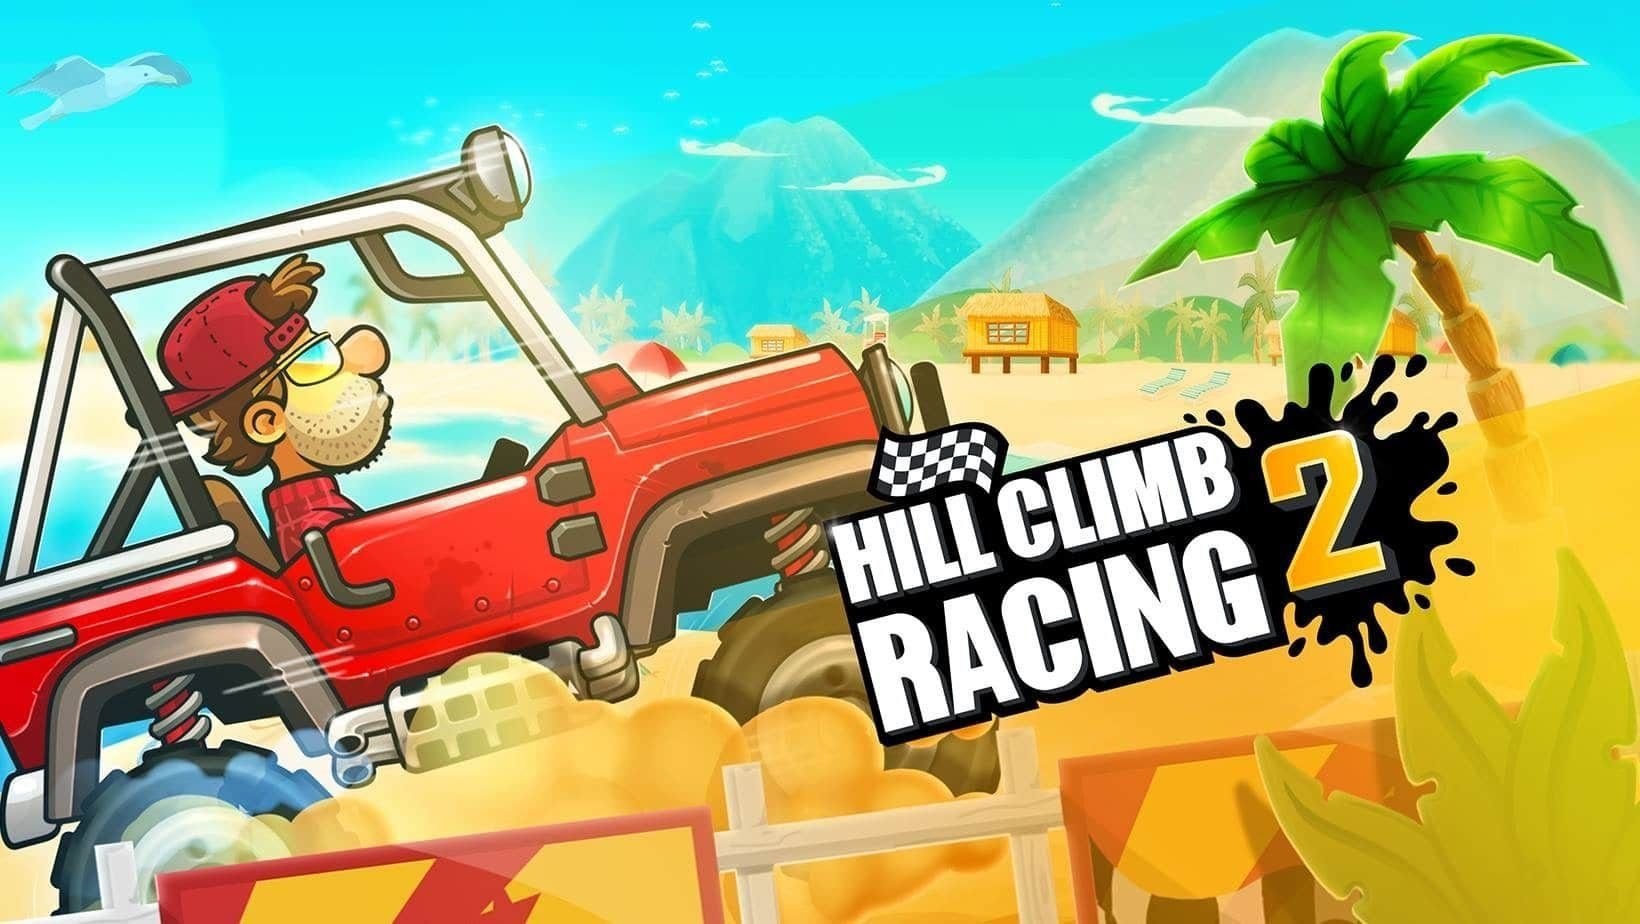 Hill climb racing car. Игра Hill Climb Racing 2. Хилл климб рейсинг 2 последняя версия. Hill Climb Racing машинки. Хилл климб рейсинг 2 машины.